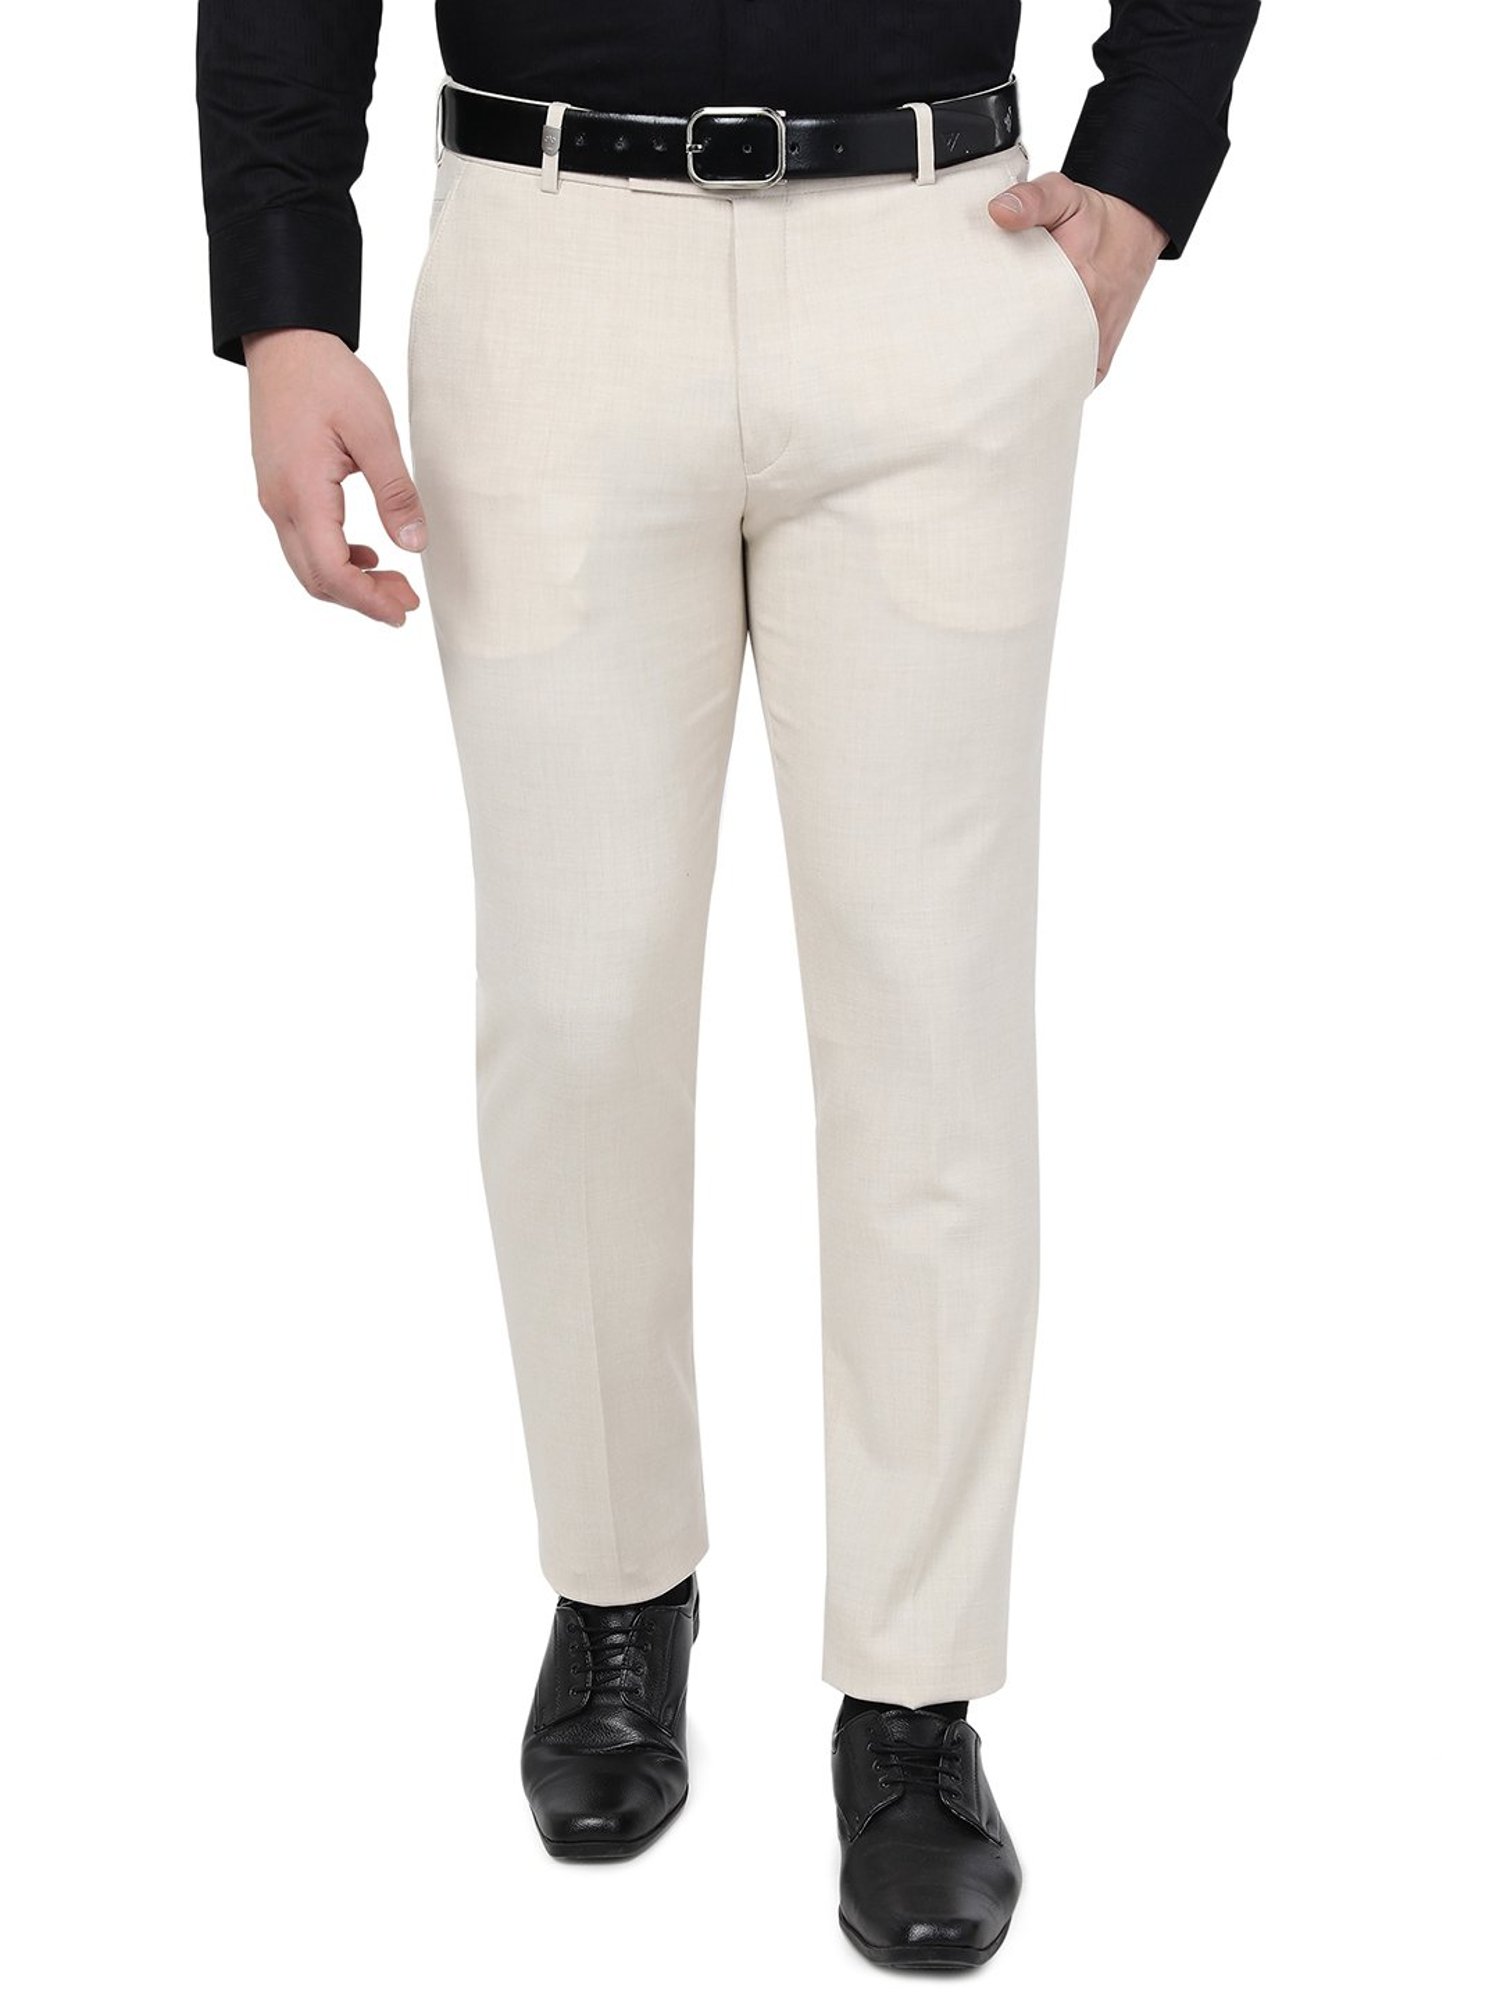 Buy Khaki Trousers  Pants for Men by Jb Studio Online  Ajiocom